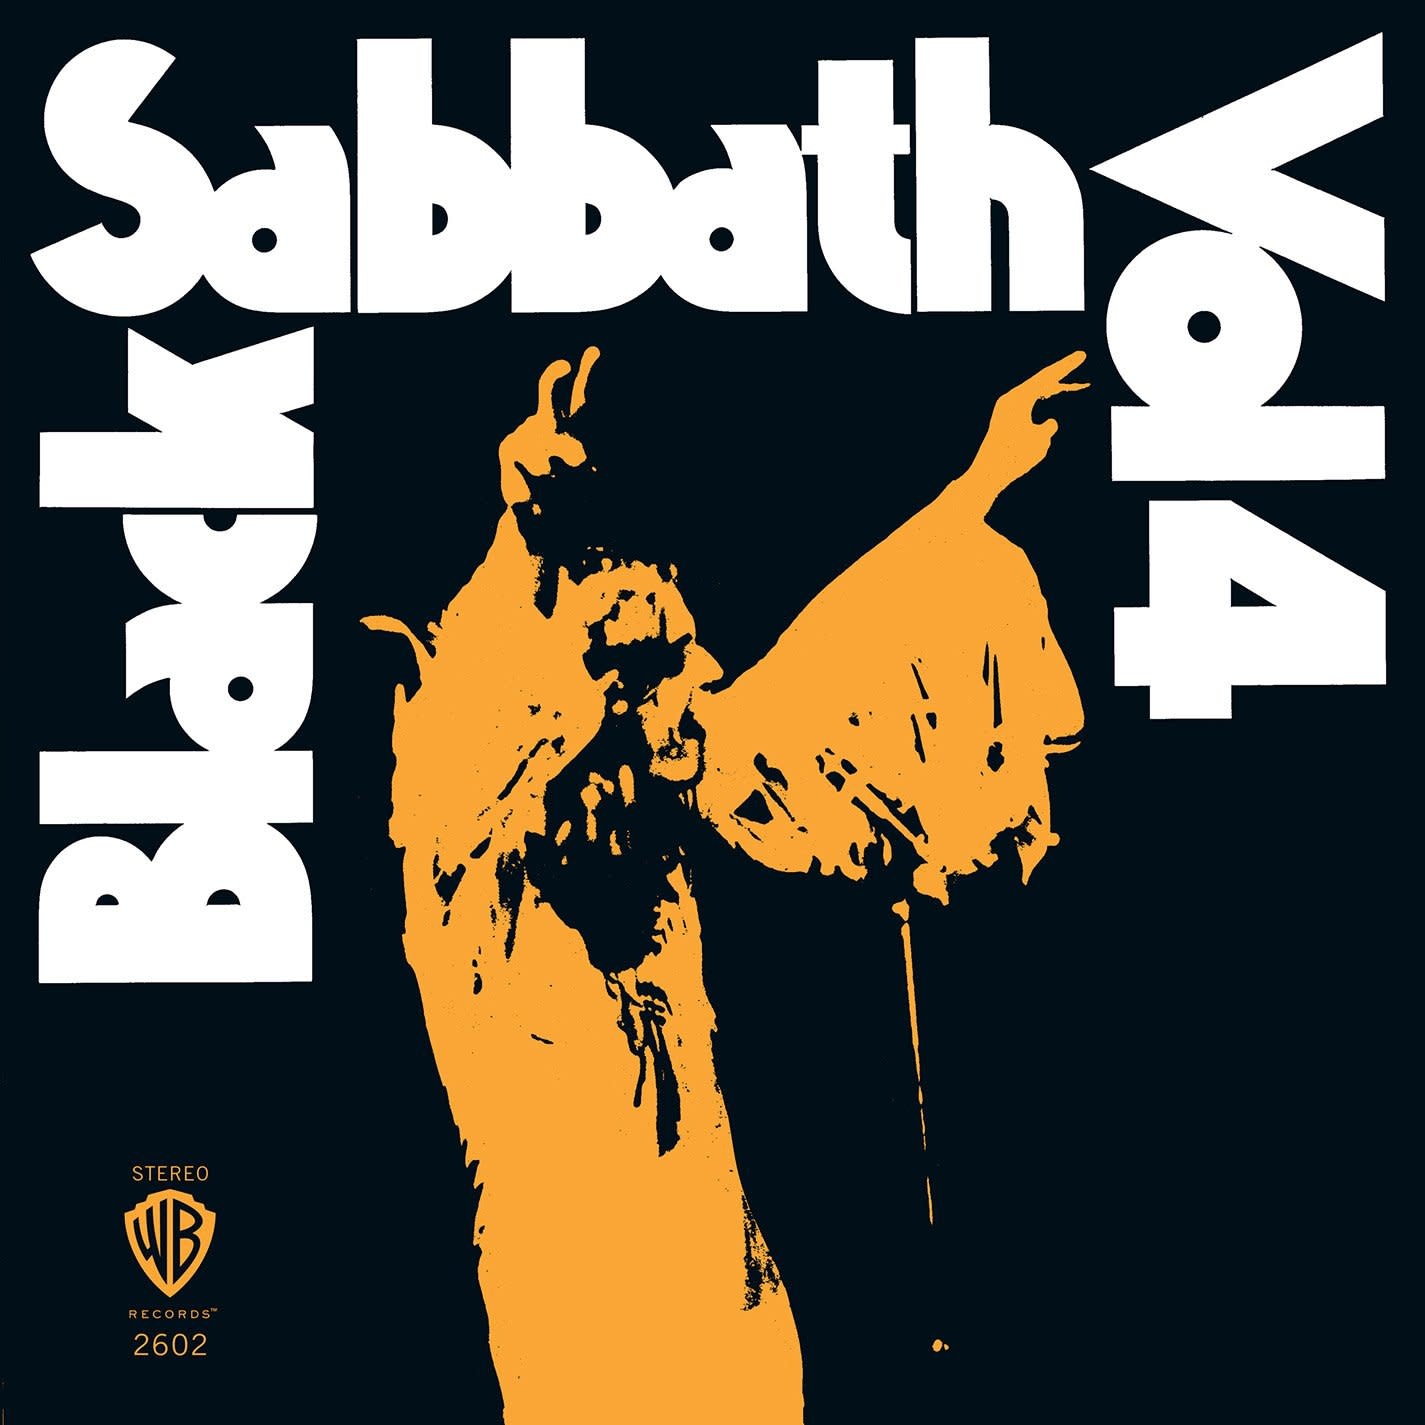 youtube cover black sabbath changes soul